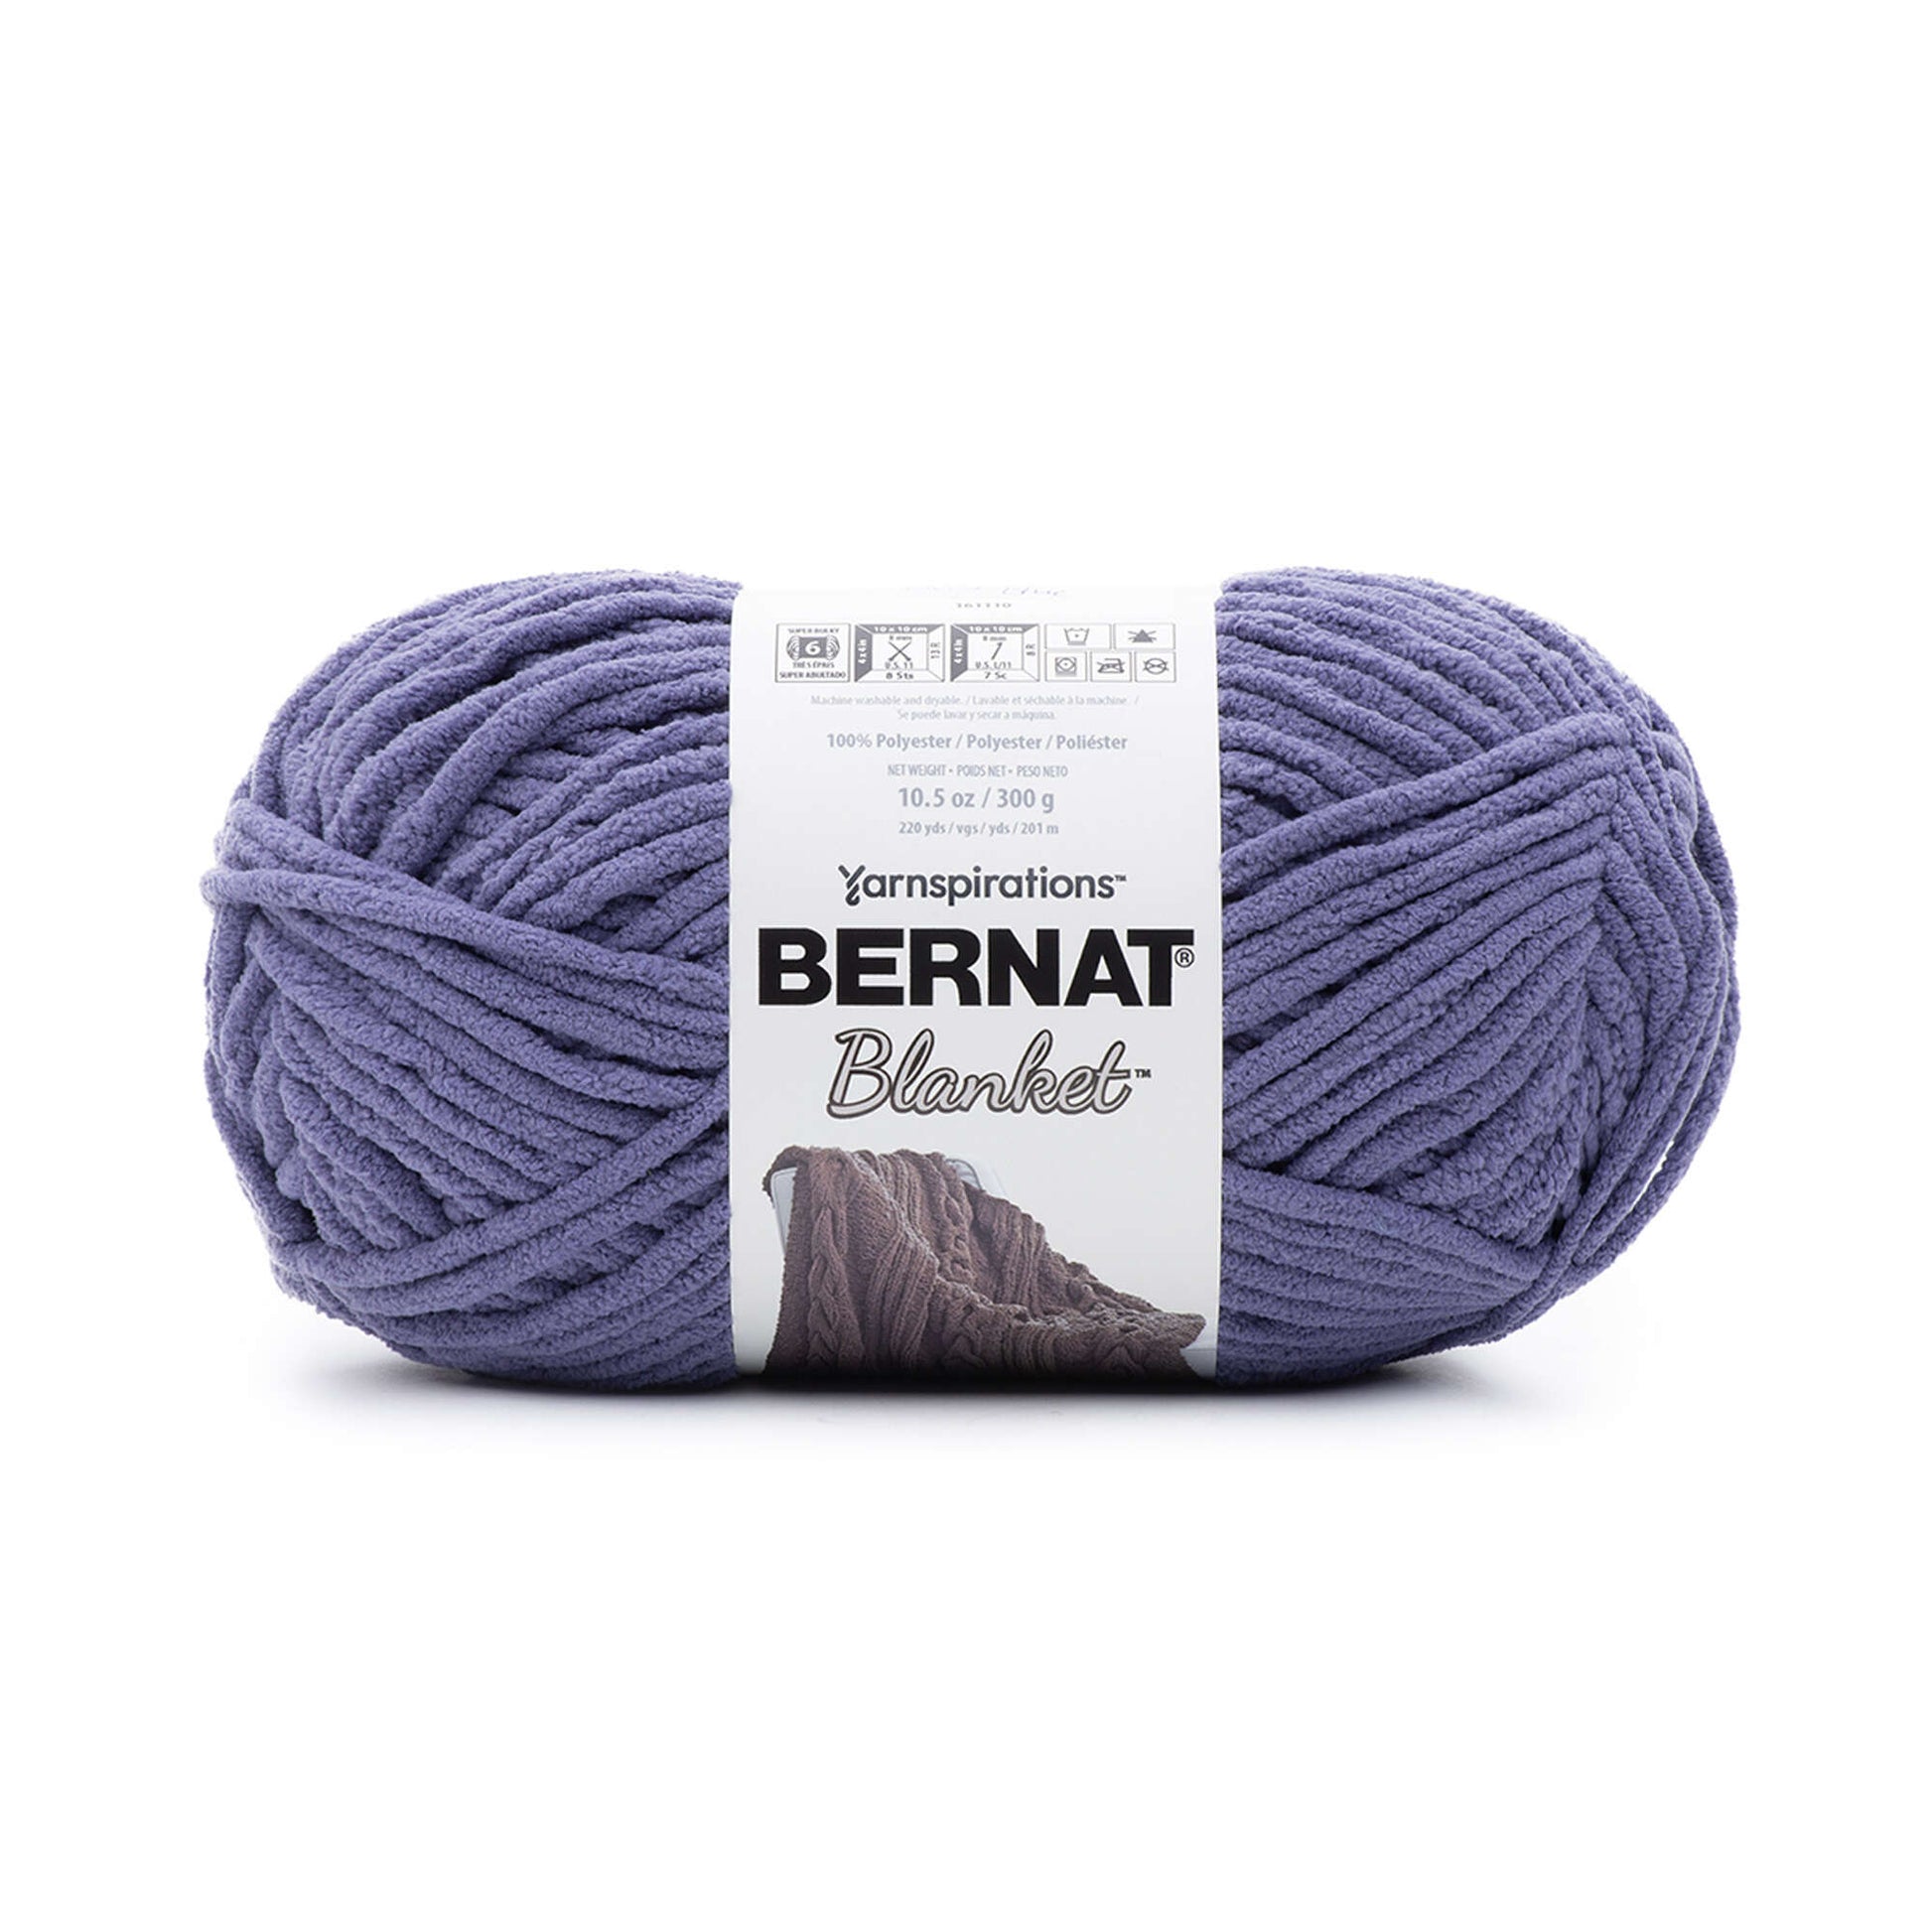 Bernat Blanket Brights Yarn (300g/10.5oz) - Discontinued Shades